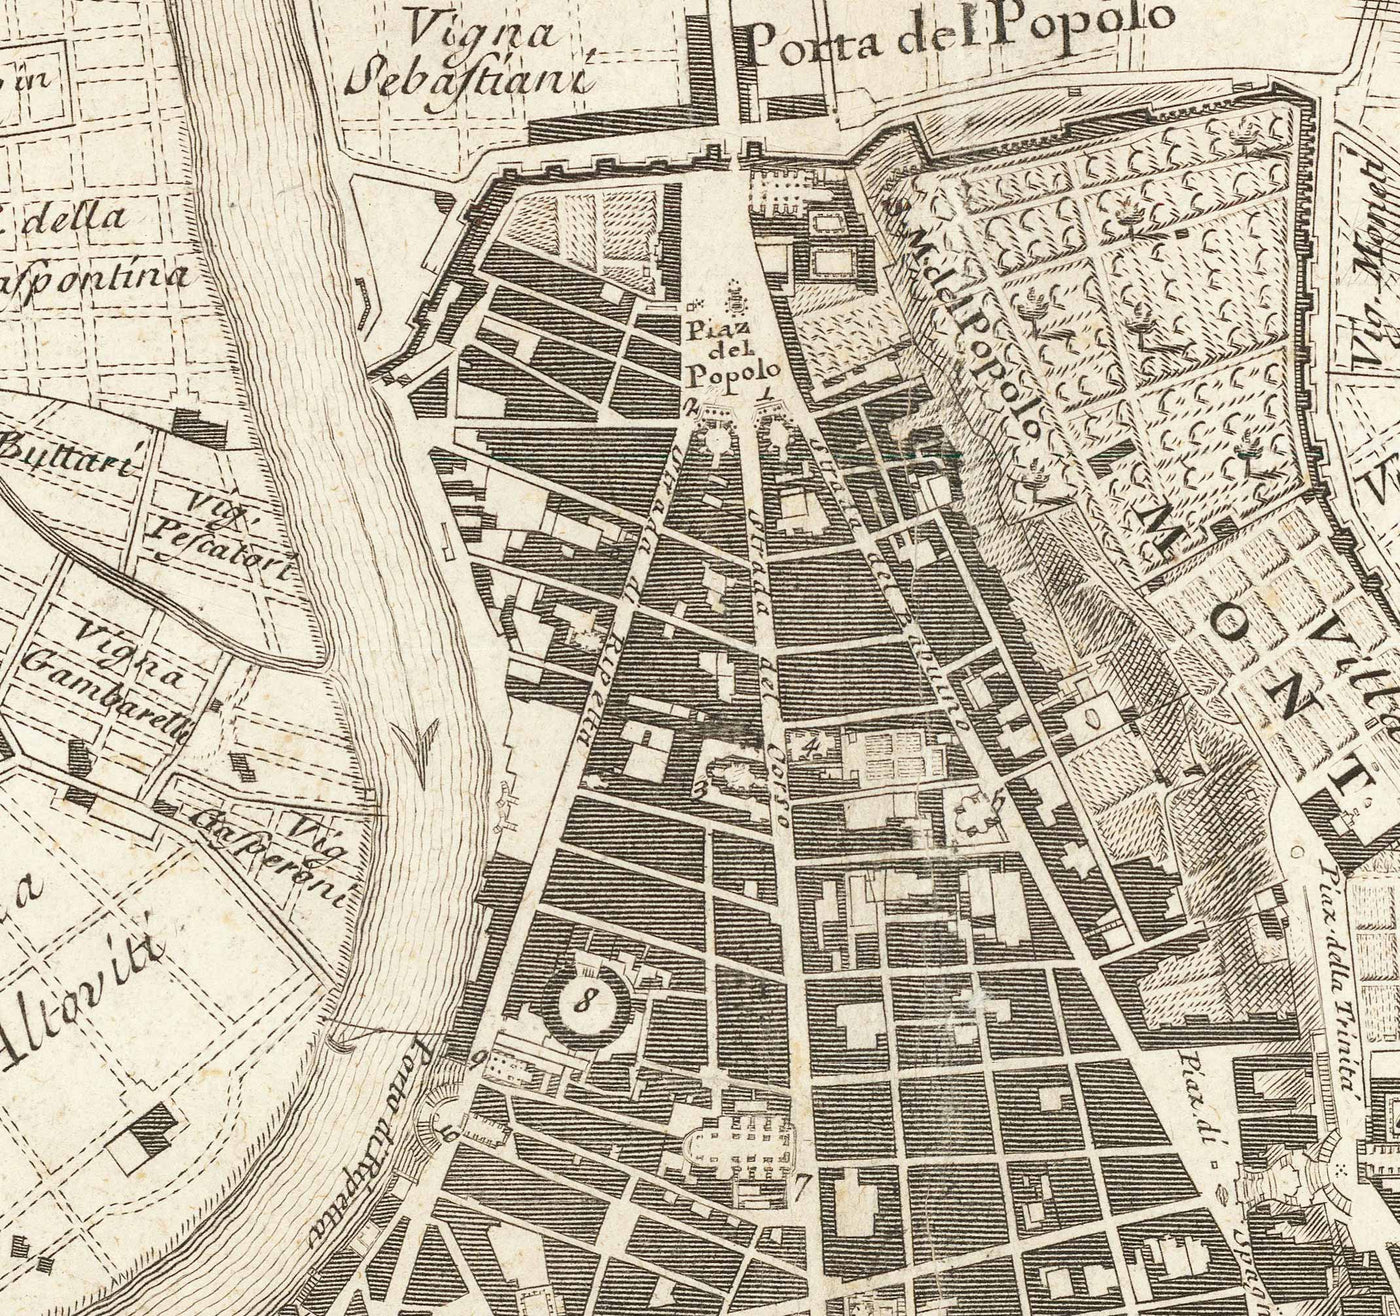 Rare ancienne carte de Rome, Italie par Nolli & Piranesi, 1748 - Vatican, Basilique St Peter, Trevi Fountain, Colosseum